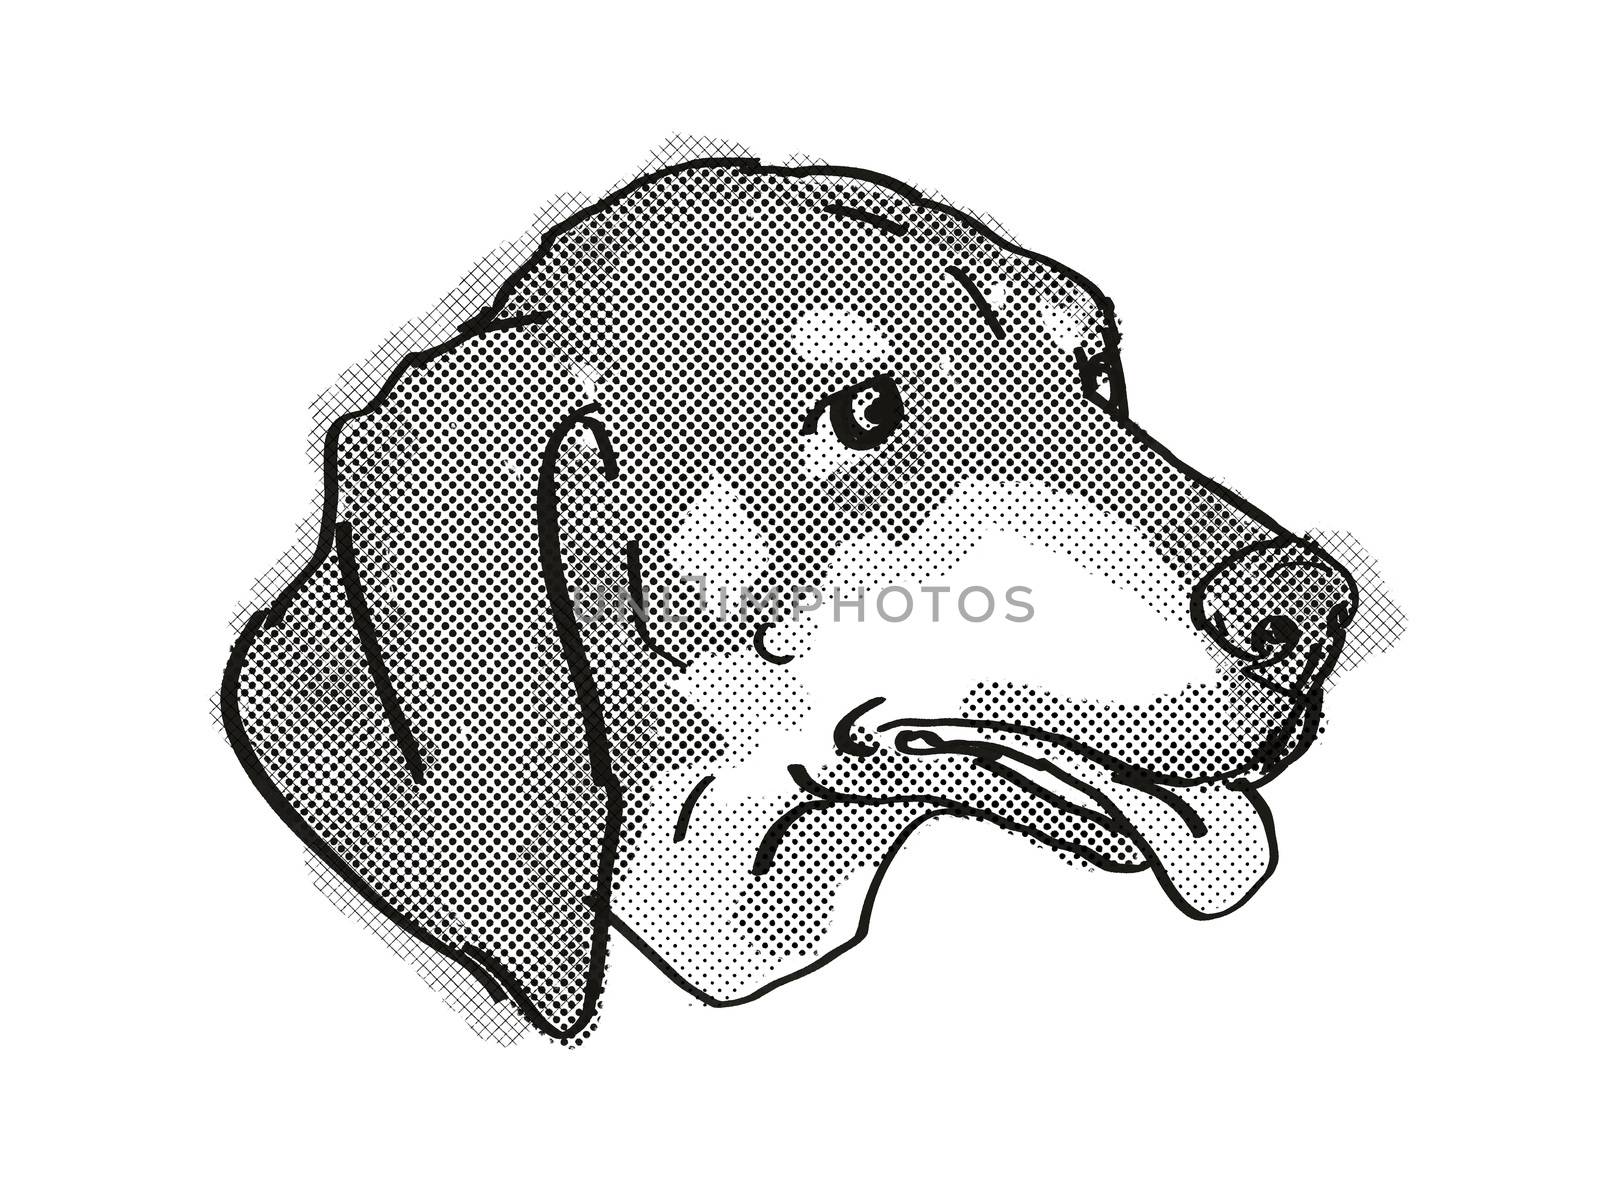  Black and Tan Coonhound Dog Breed Cartoon Retro Drawing by patrimonio